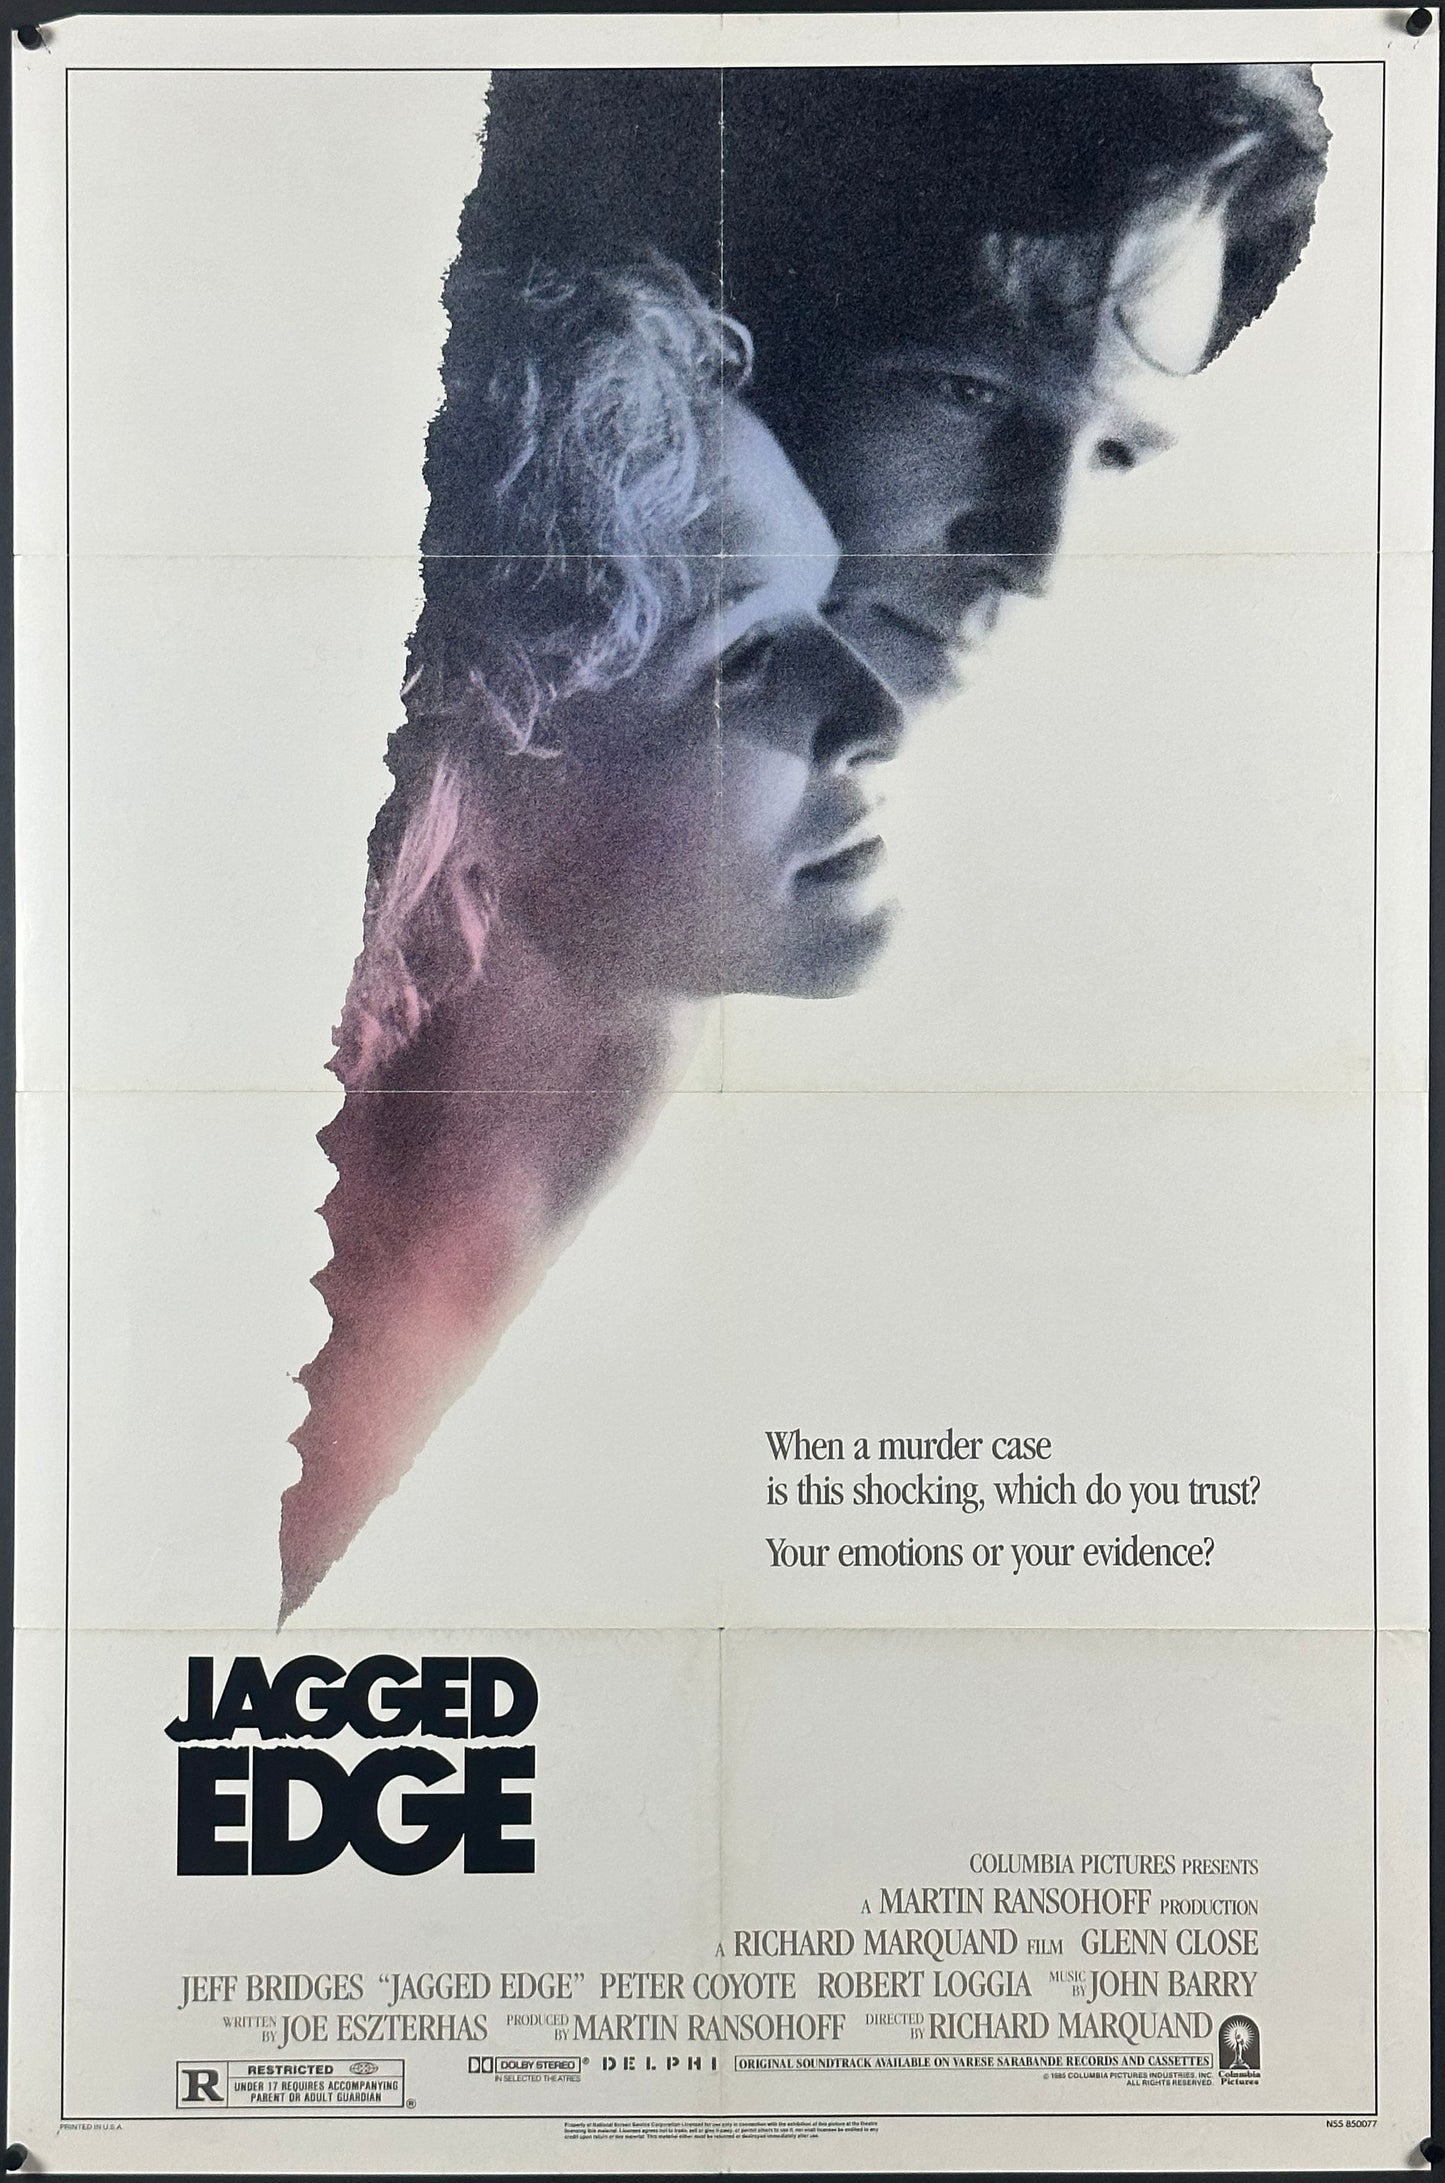 Jagged Edge - posterpalace.com